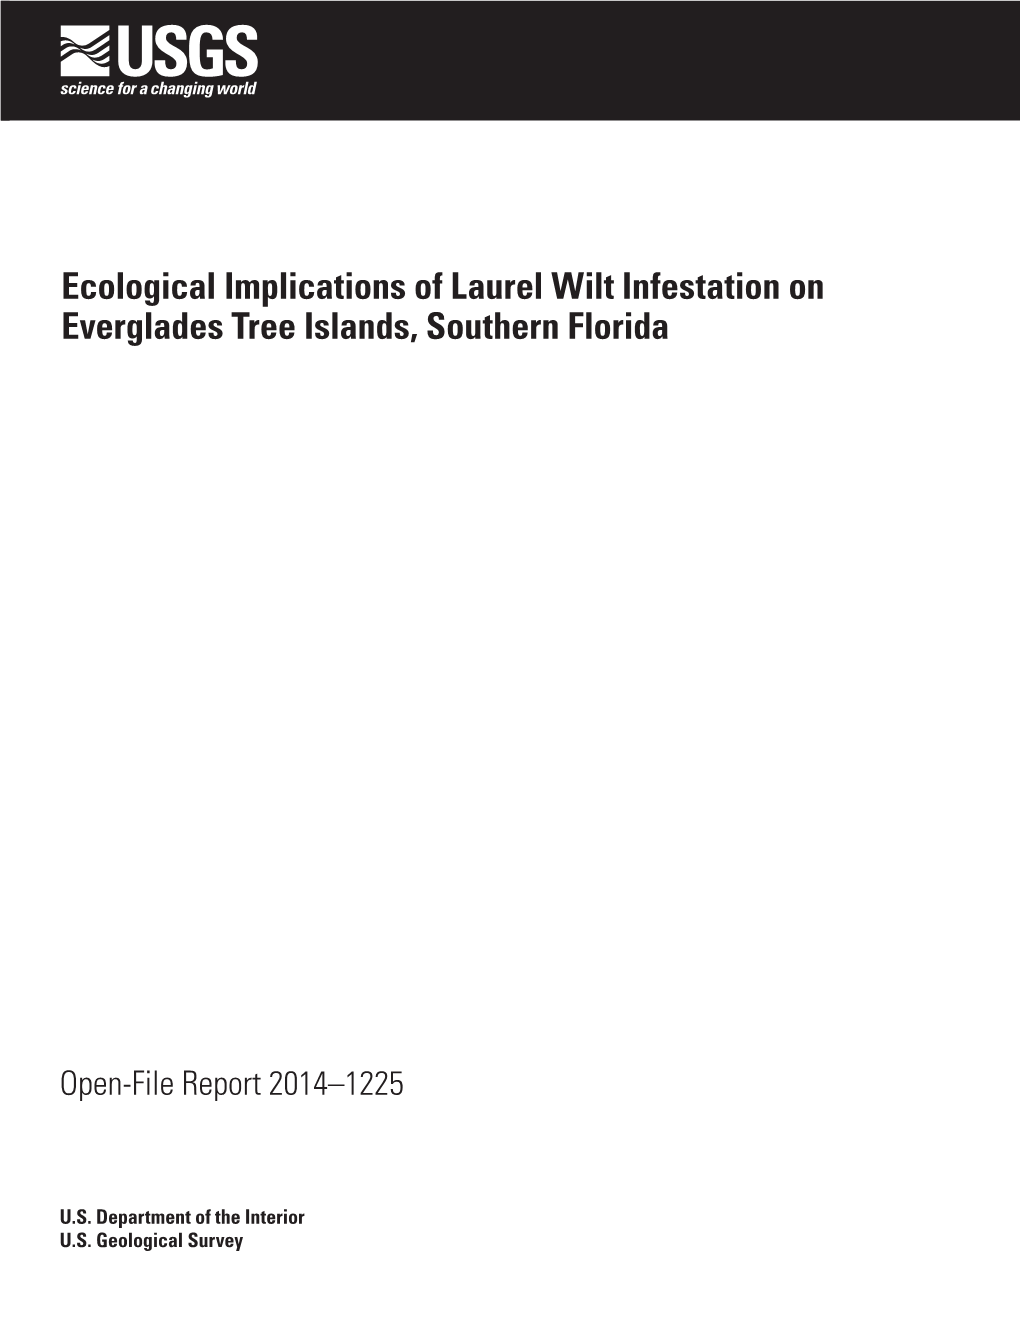 Ecological Implications of Laurel Wilt Infestations on Everglades Tree